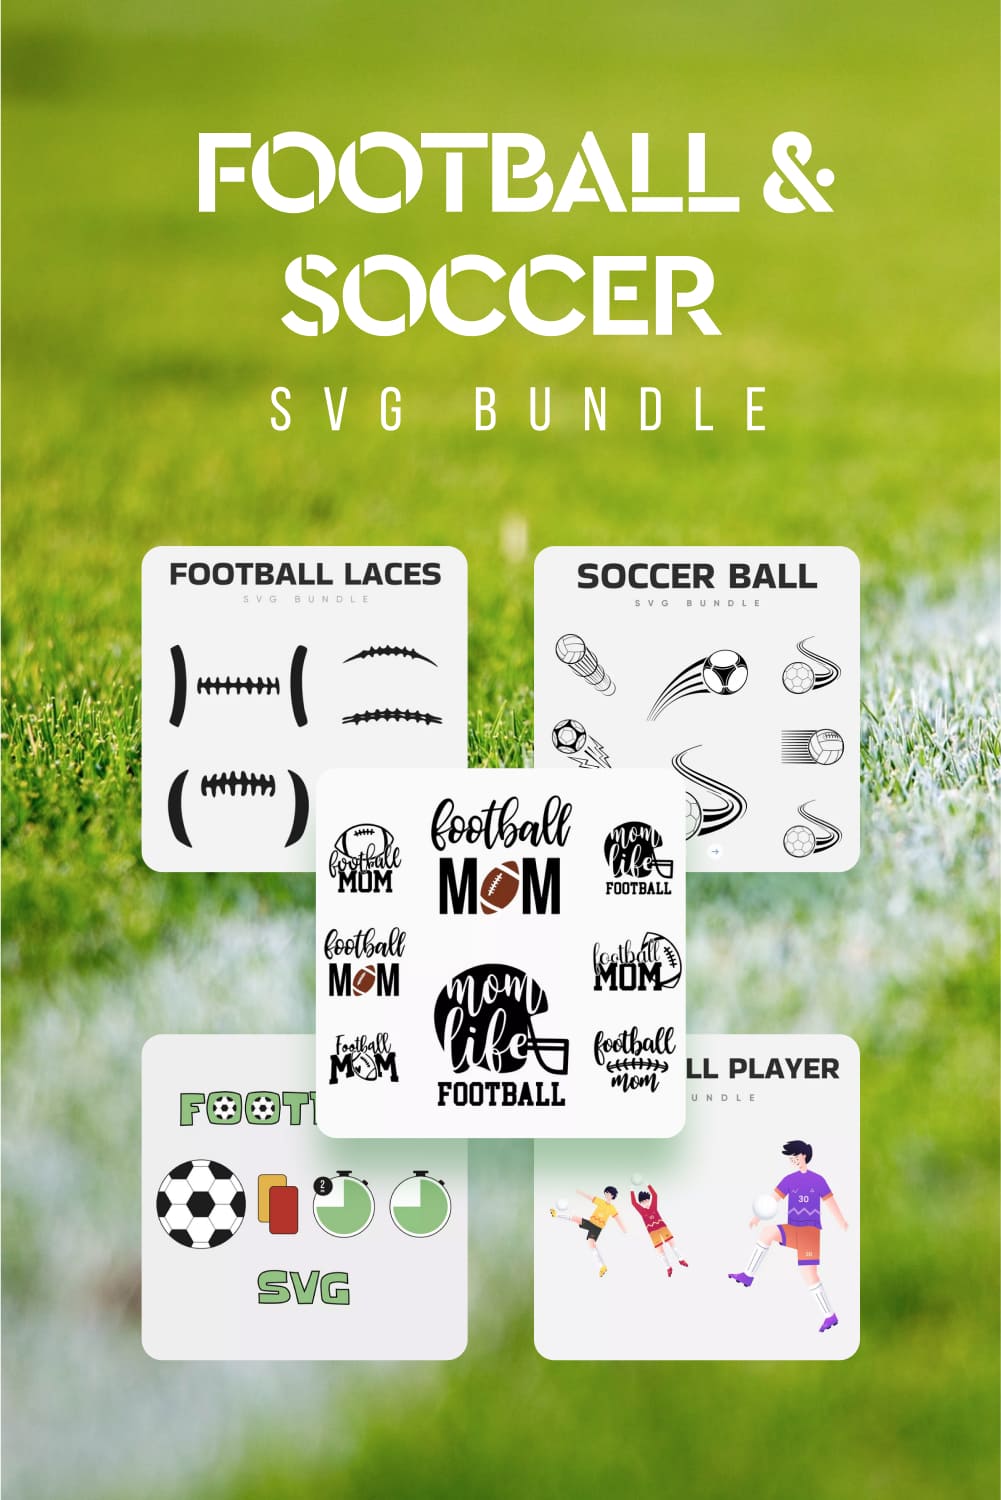 Football And Soccer SVG Bundle Pinterest.